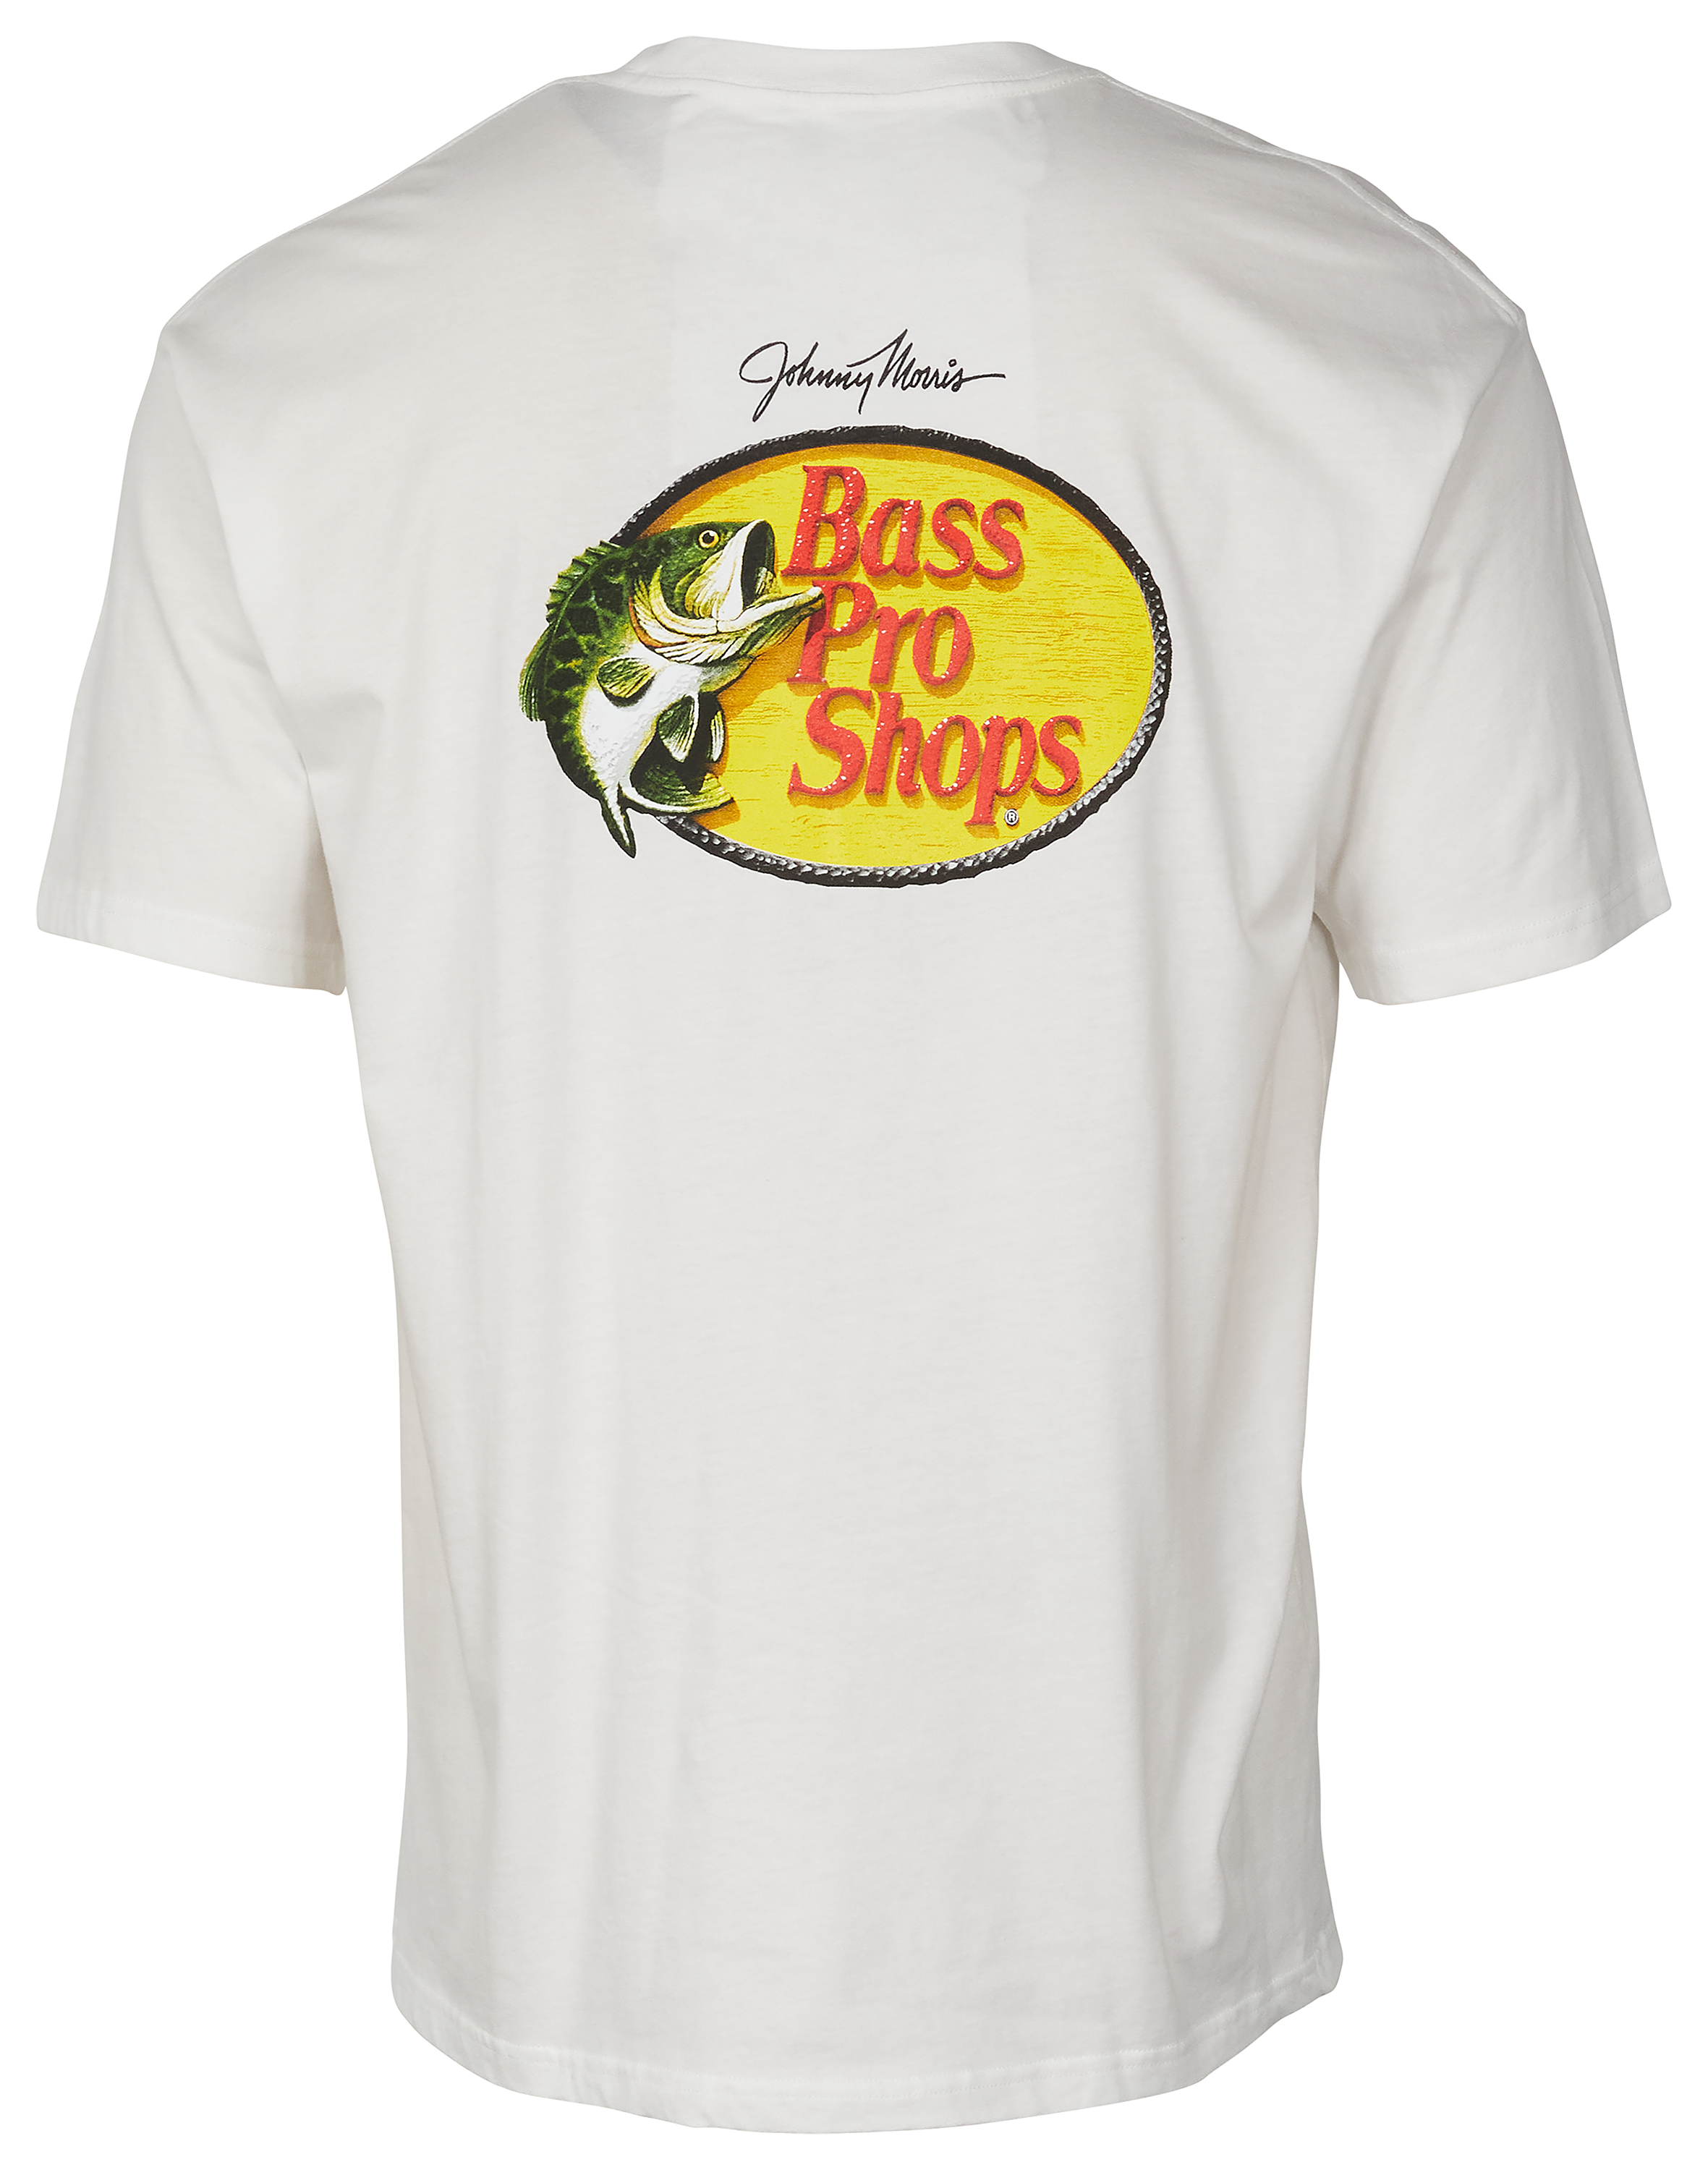 Bass Pro Shops Tennessee Script Short-Sleeve T-Shirt for Men - Black - M